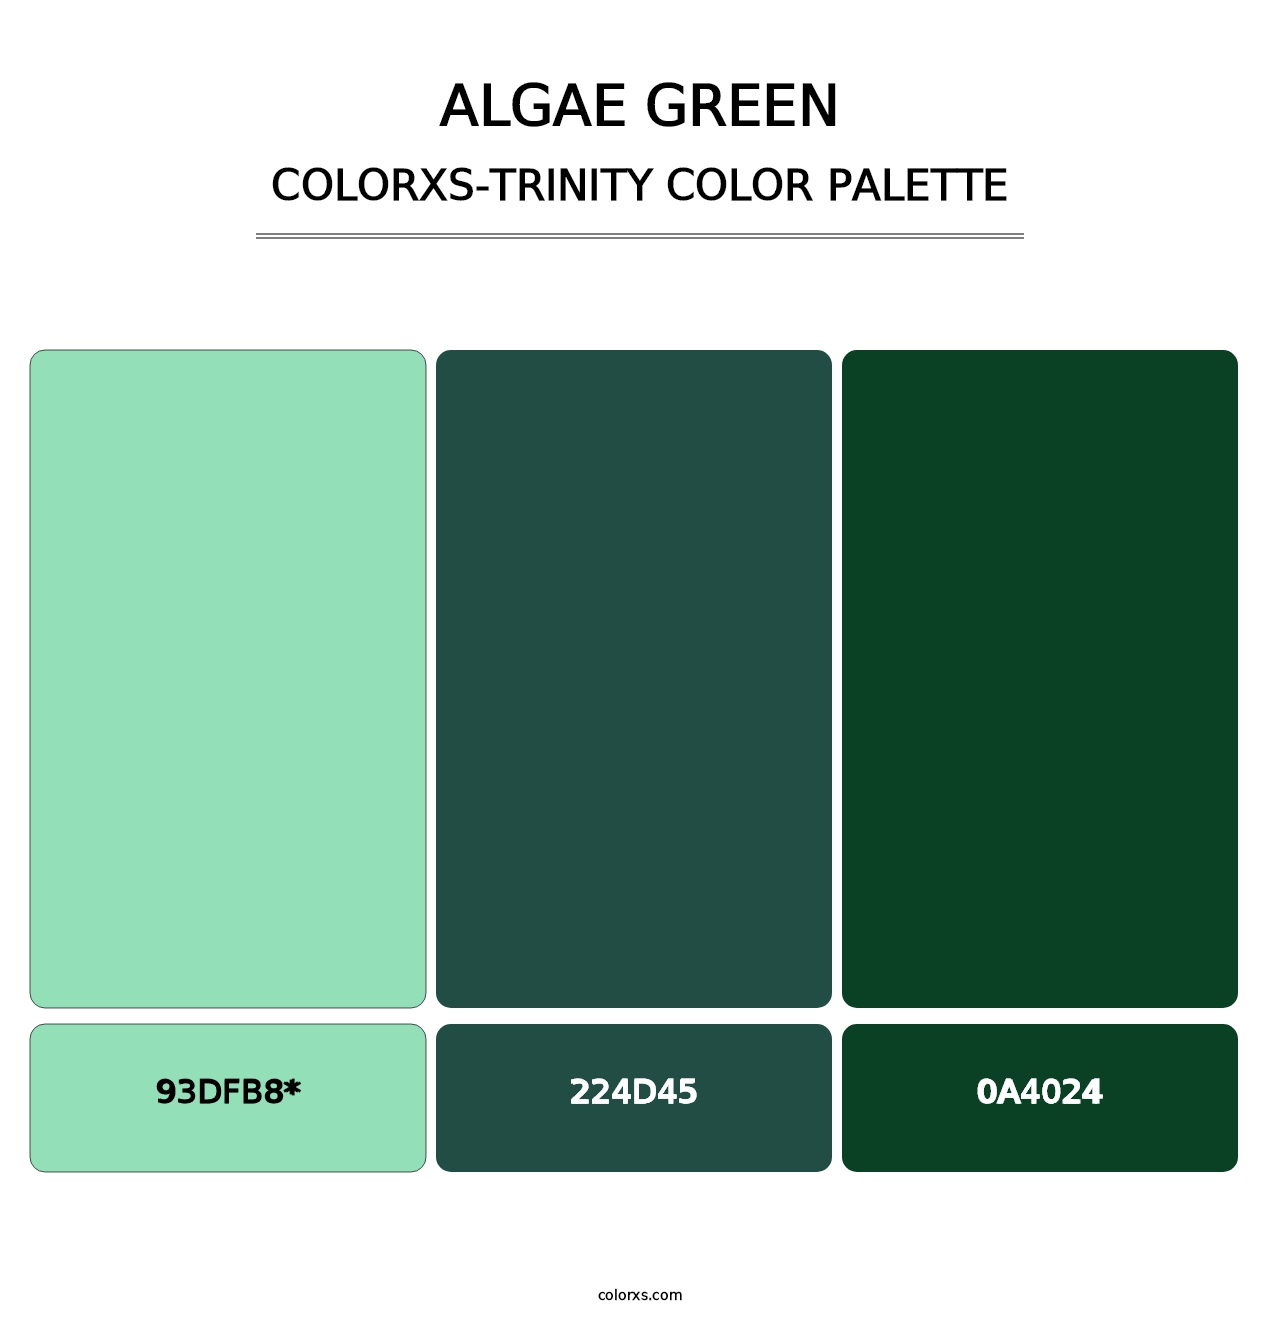 Algae Green - Colorxs Trinity Palette